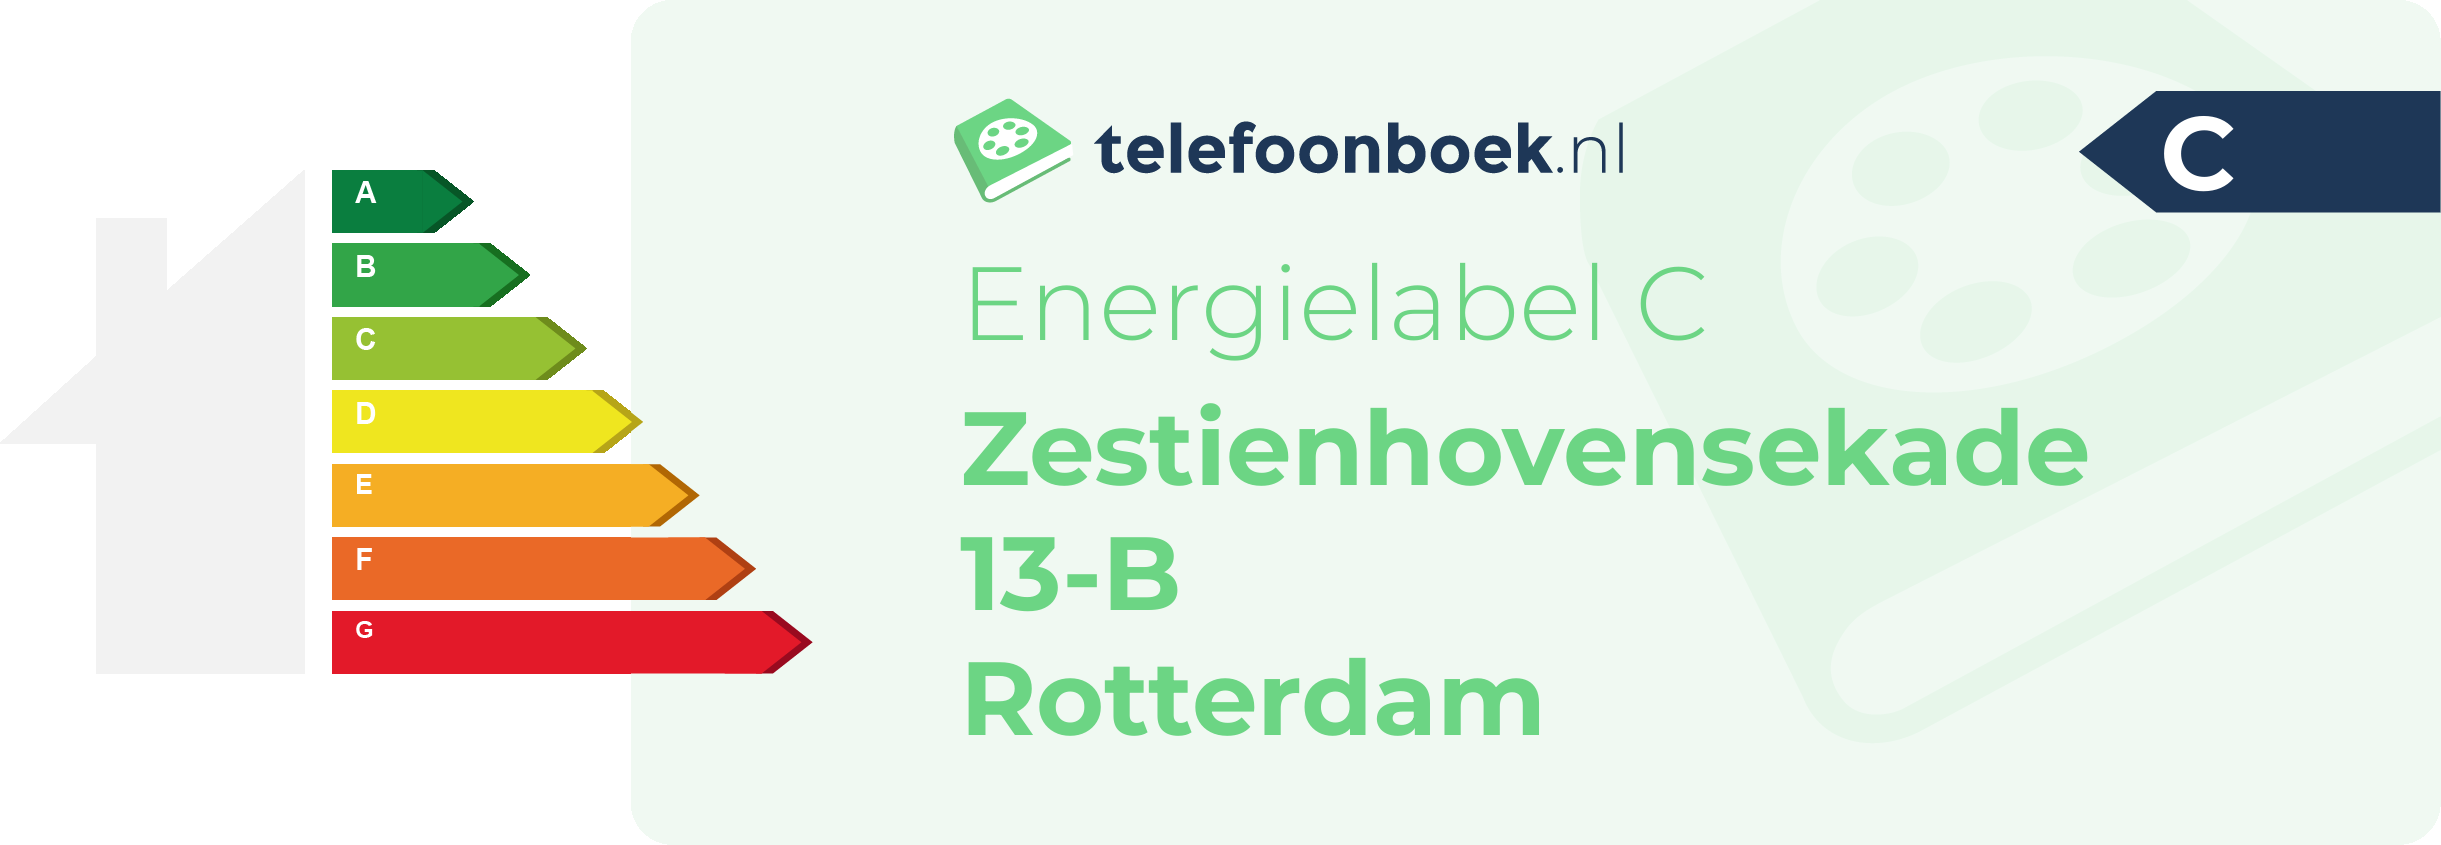 Energielabel Zestienhovensekade 13-B Rotterdam